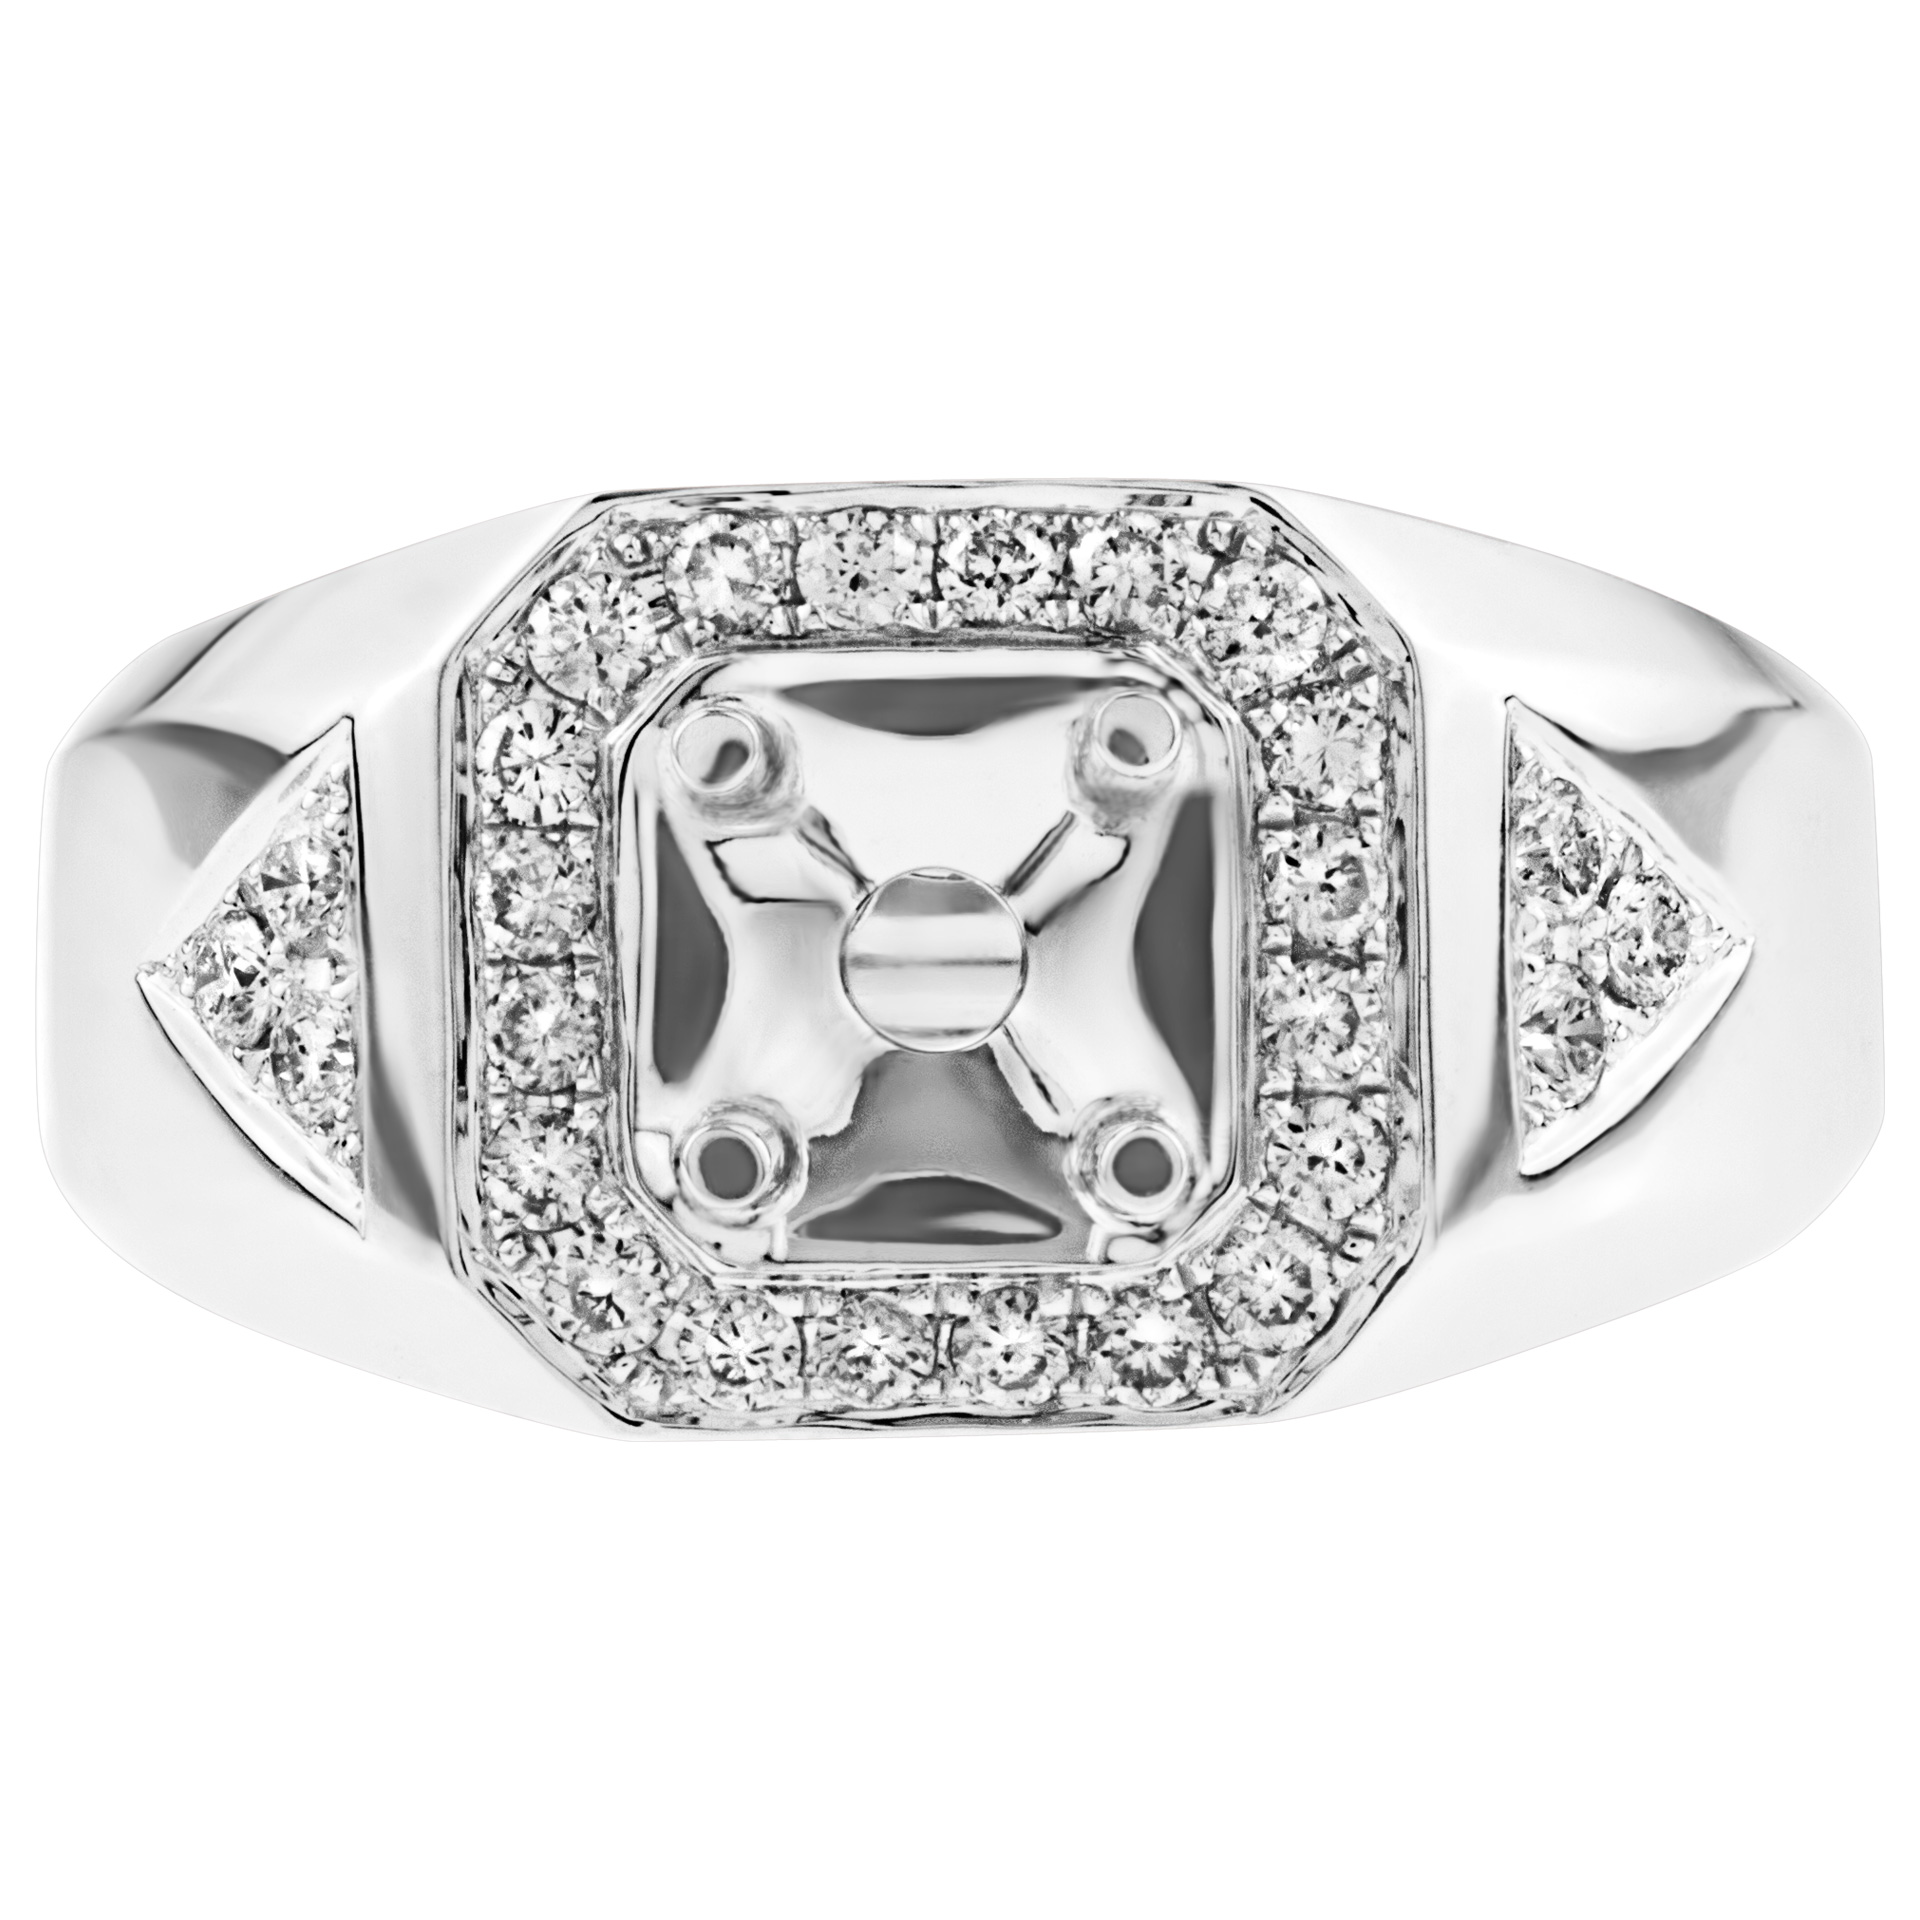 Diamond ring set in 18k white gold. 0.57 carats in round clean white diamonds